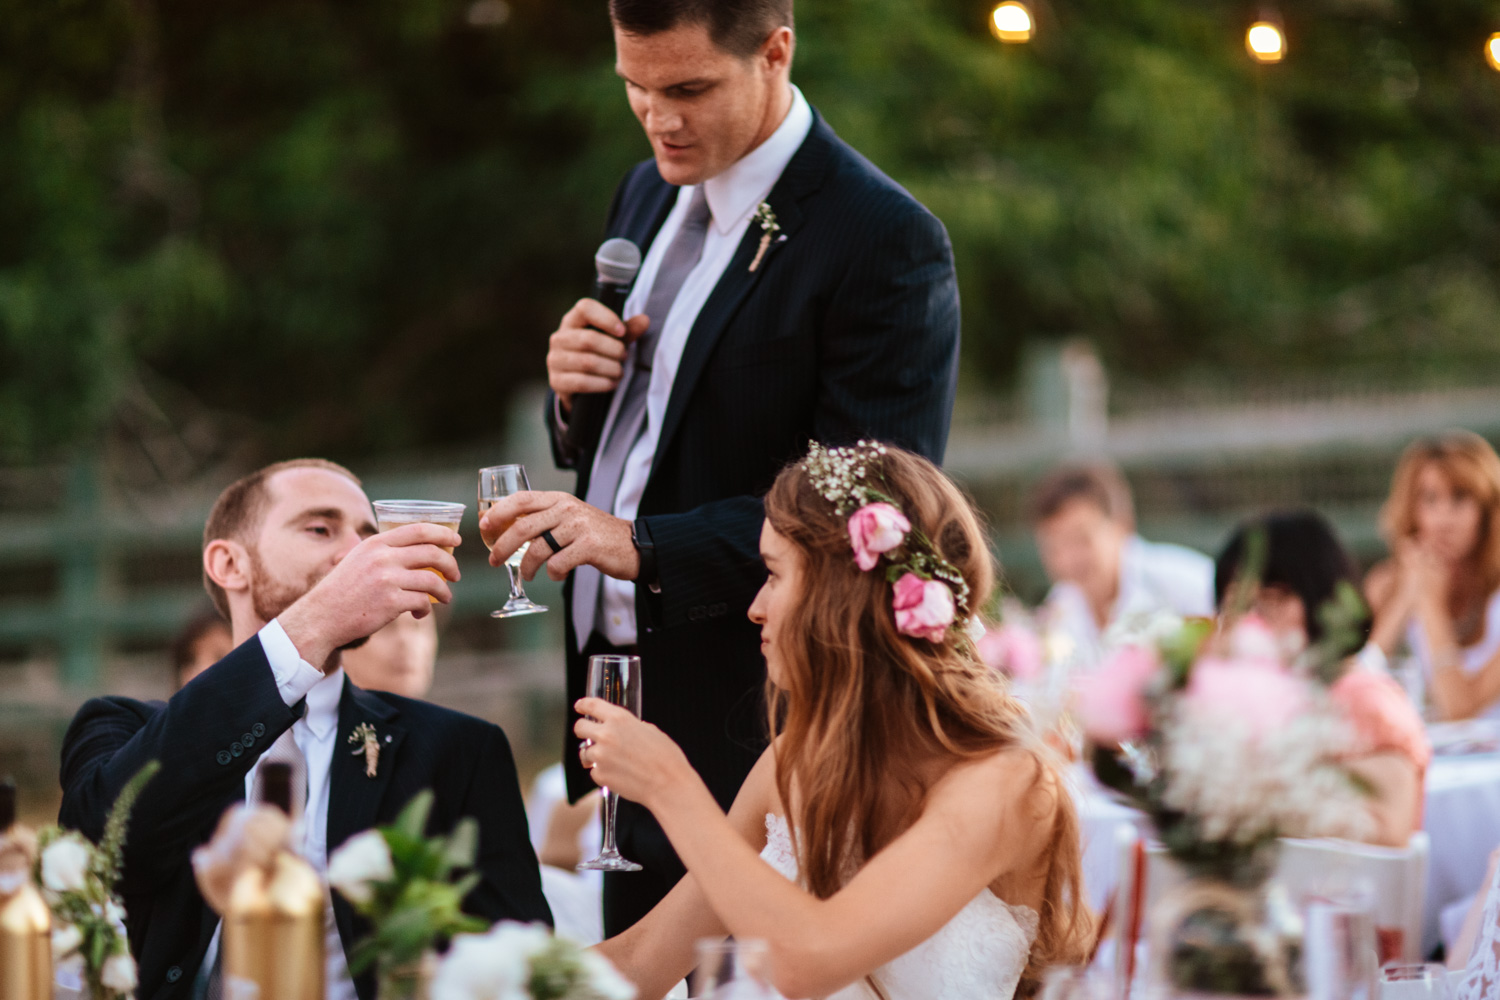 Napa Valley Vacaville Wedding Photographer - Hannah & Stephen - The Gathering Season x weareleoandkat 097.jpg